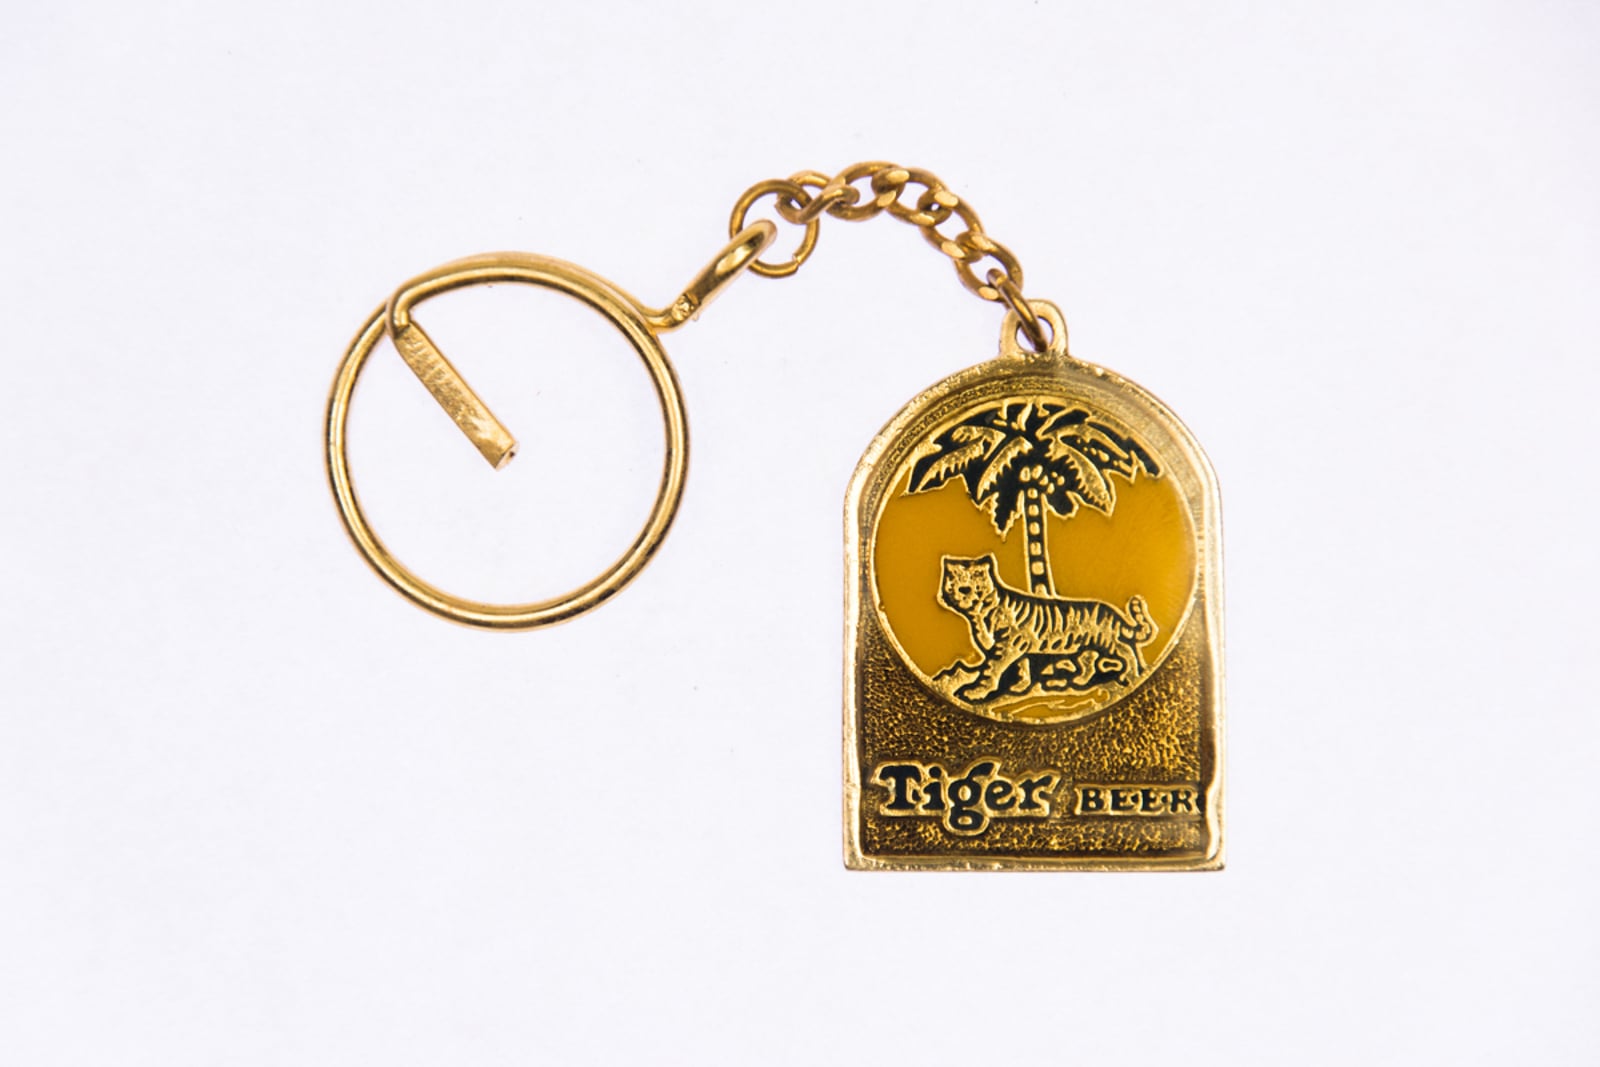 Tiger Beer Golden Key Chain